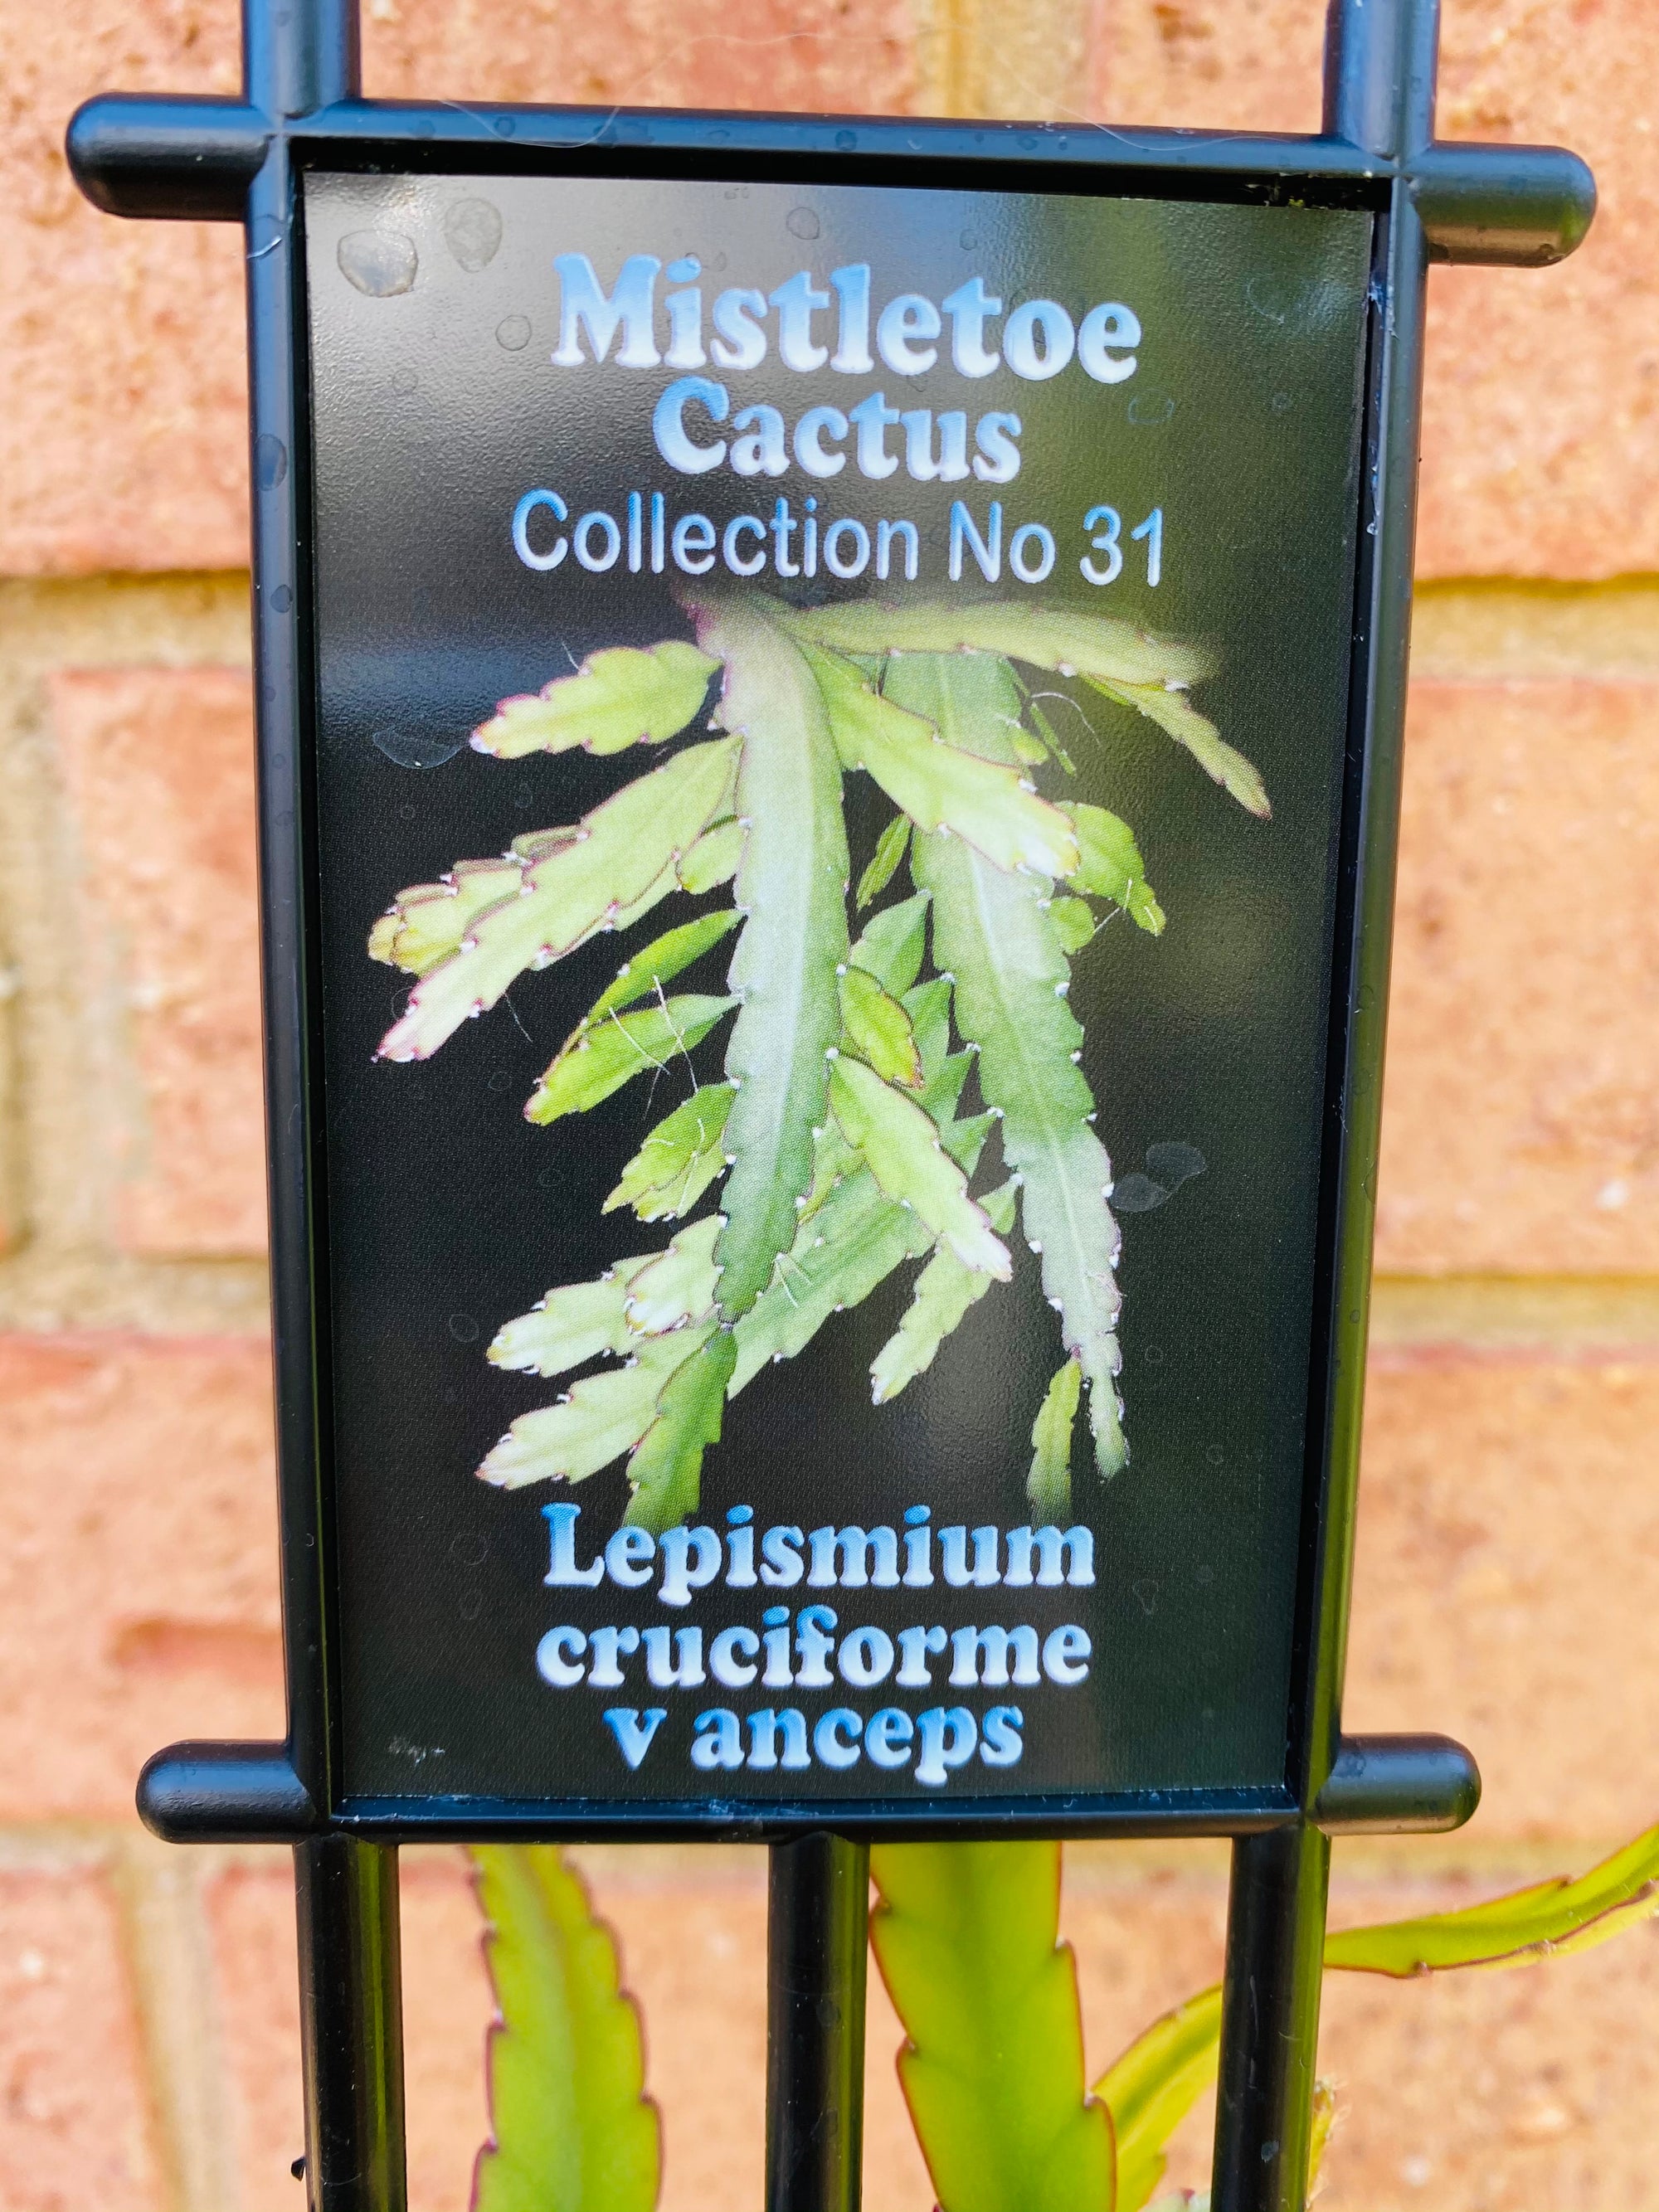 Rhipsalis Lepismium Cruciforme v Anceps - Mistletoe Cactus Collection No. 31